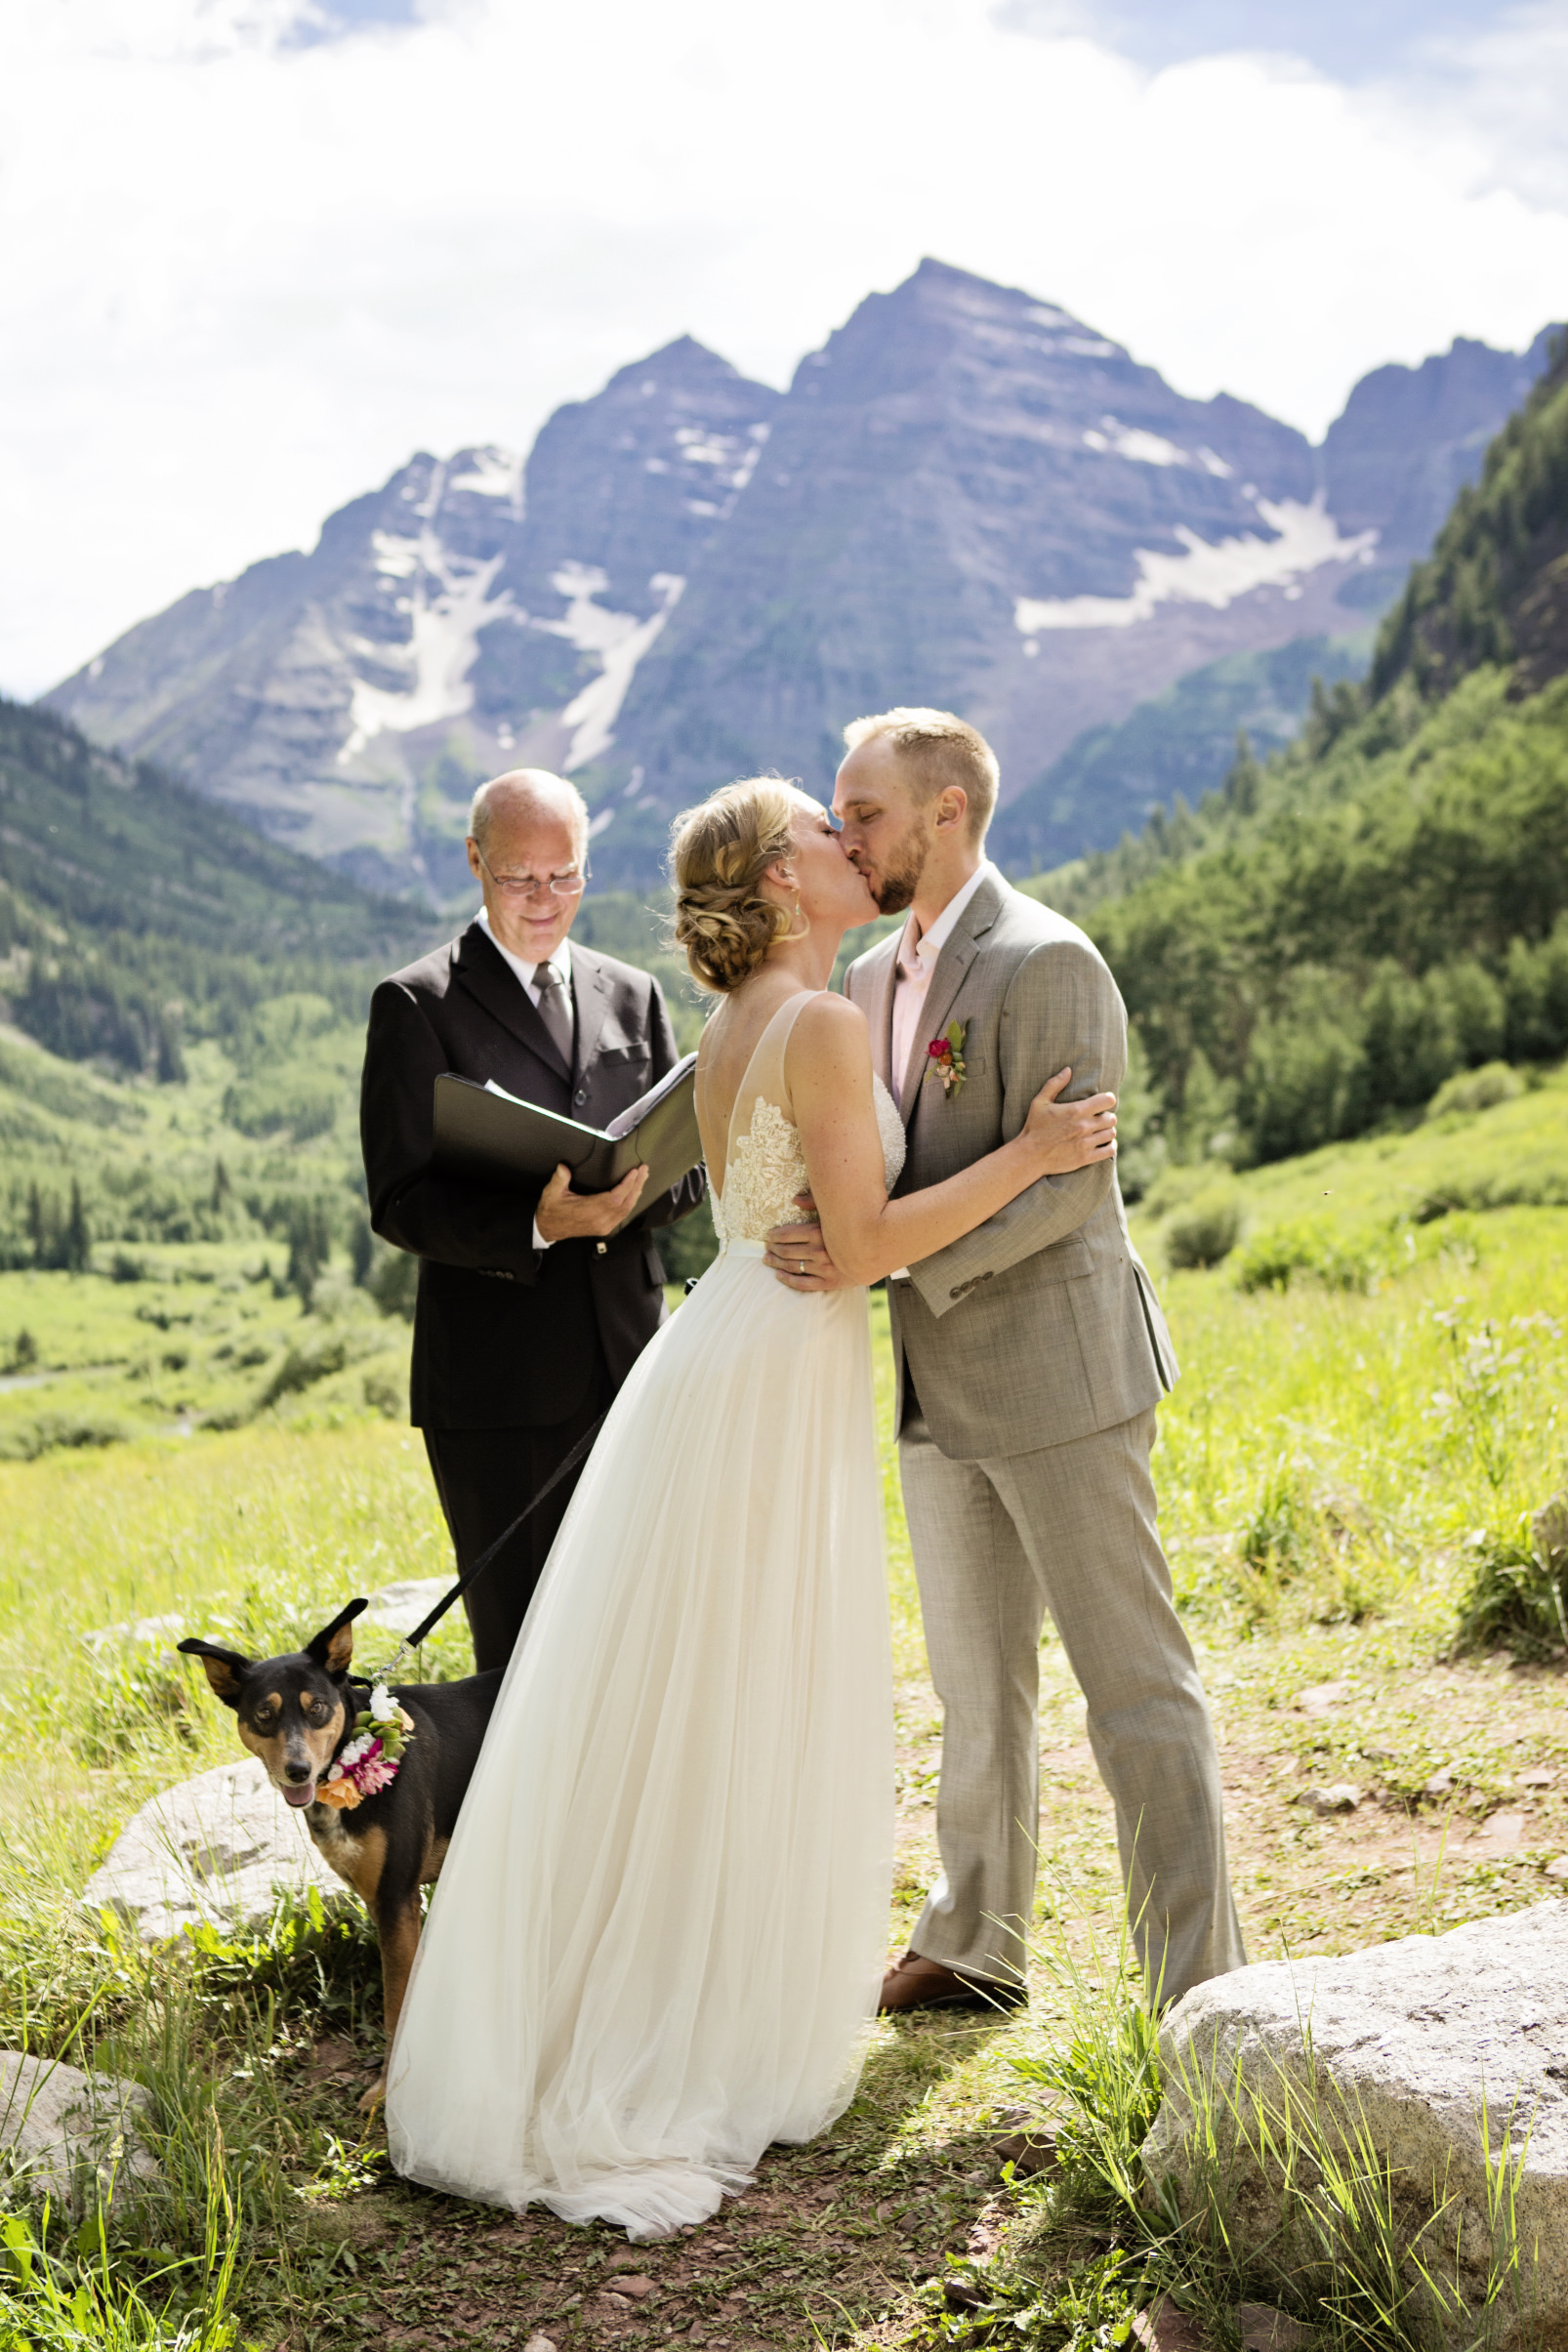 Summer Weddings in Aspen Colorado | Windfirm Photography